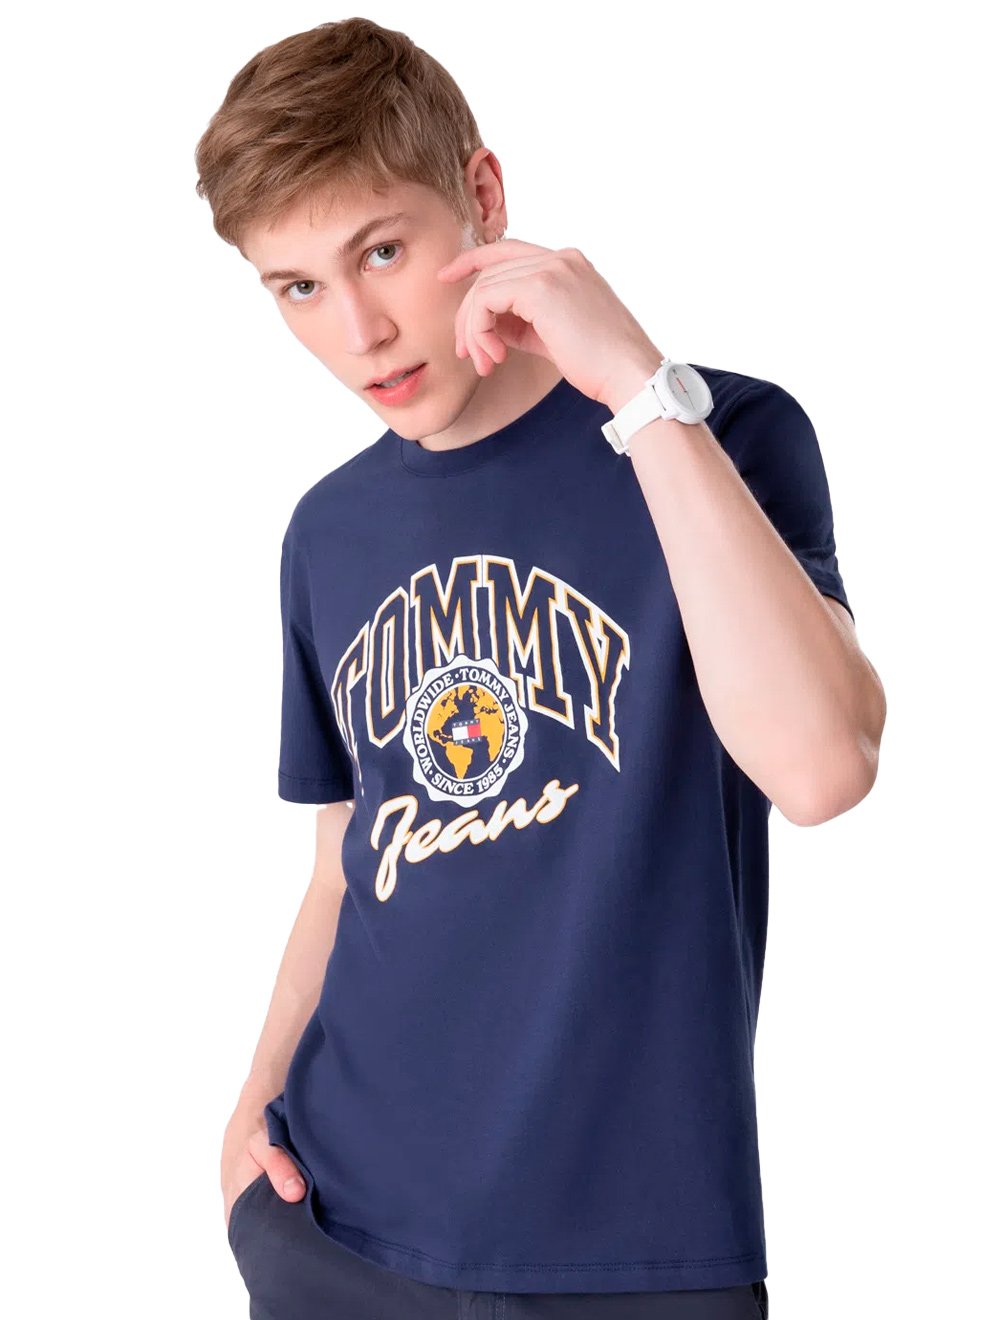 Camiseta Tommy Jeans Masculina Bold College Graphic Azul Marinho